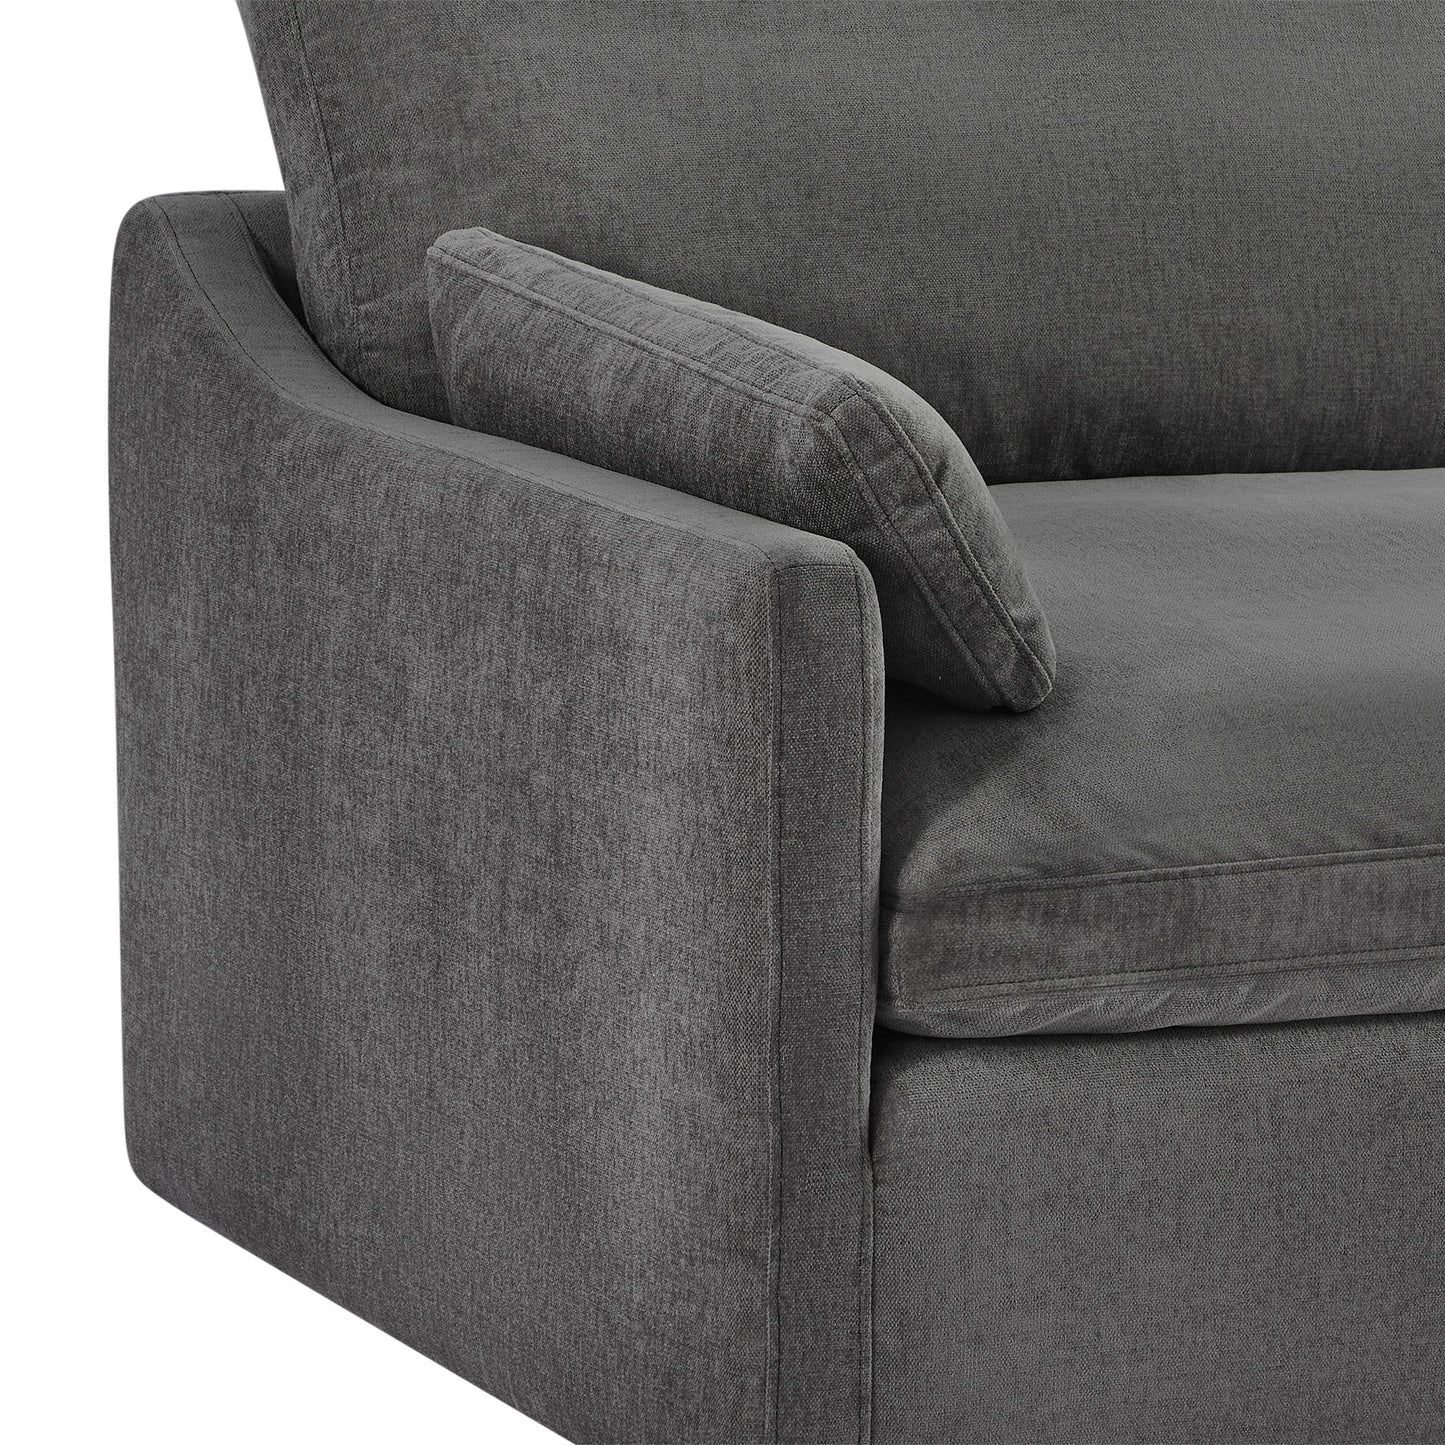 CHITA LIVING-Kenna Modular 4-Piece Sofa-Chaise Sectional (131")-Sofas-Fabric-Dark Gray-